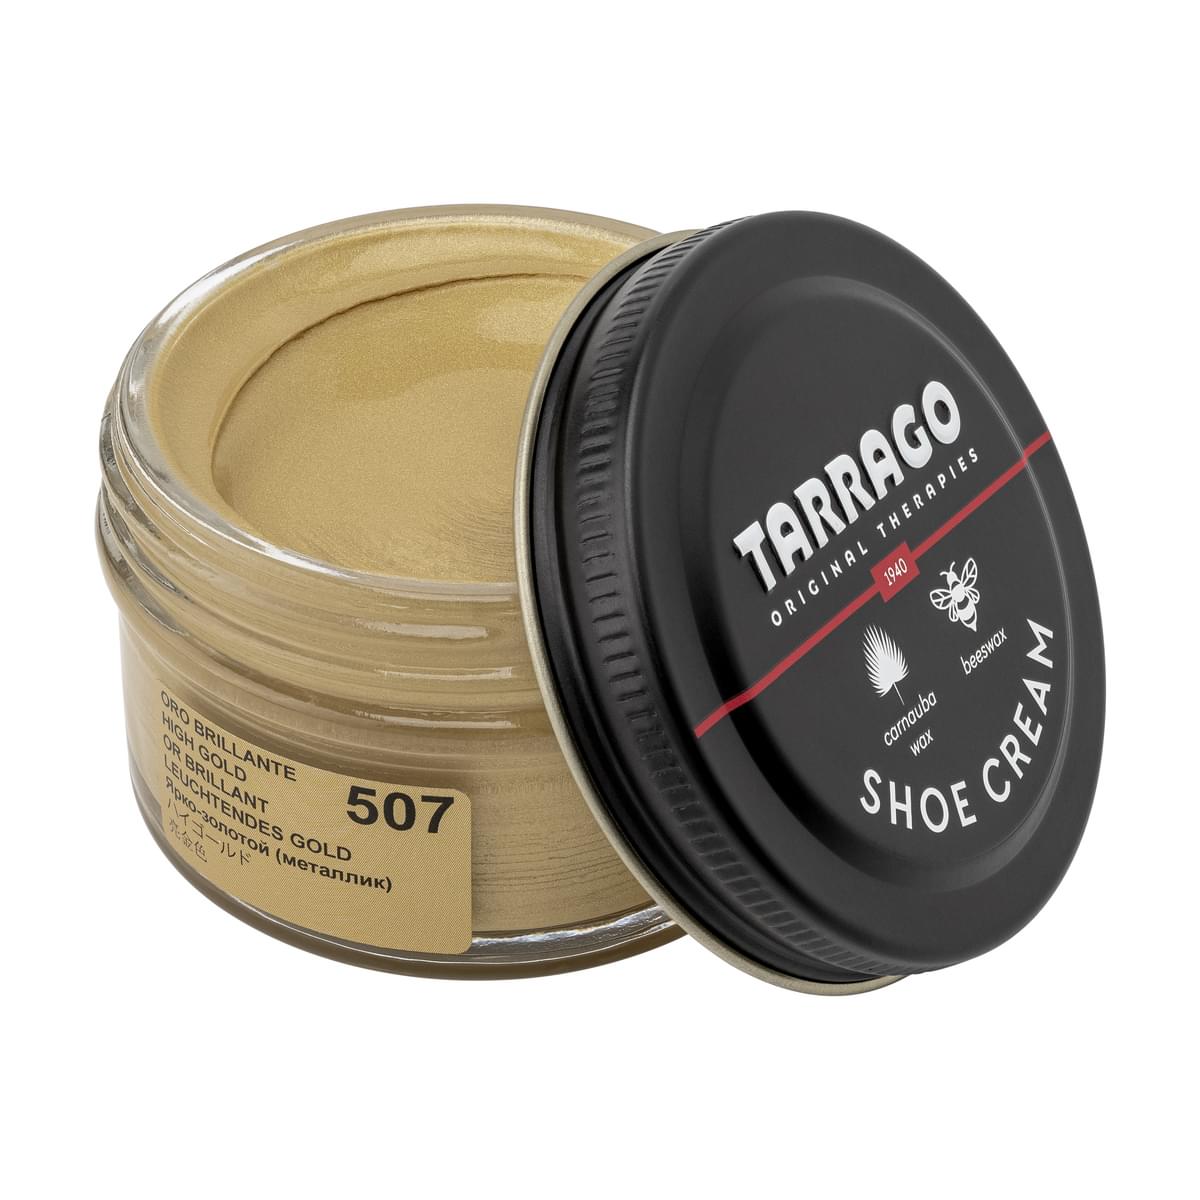 Tarrago Shoe Cream  - High Gold - 507